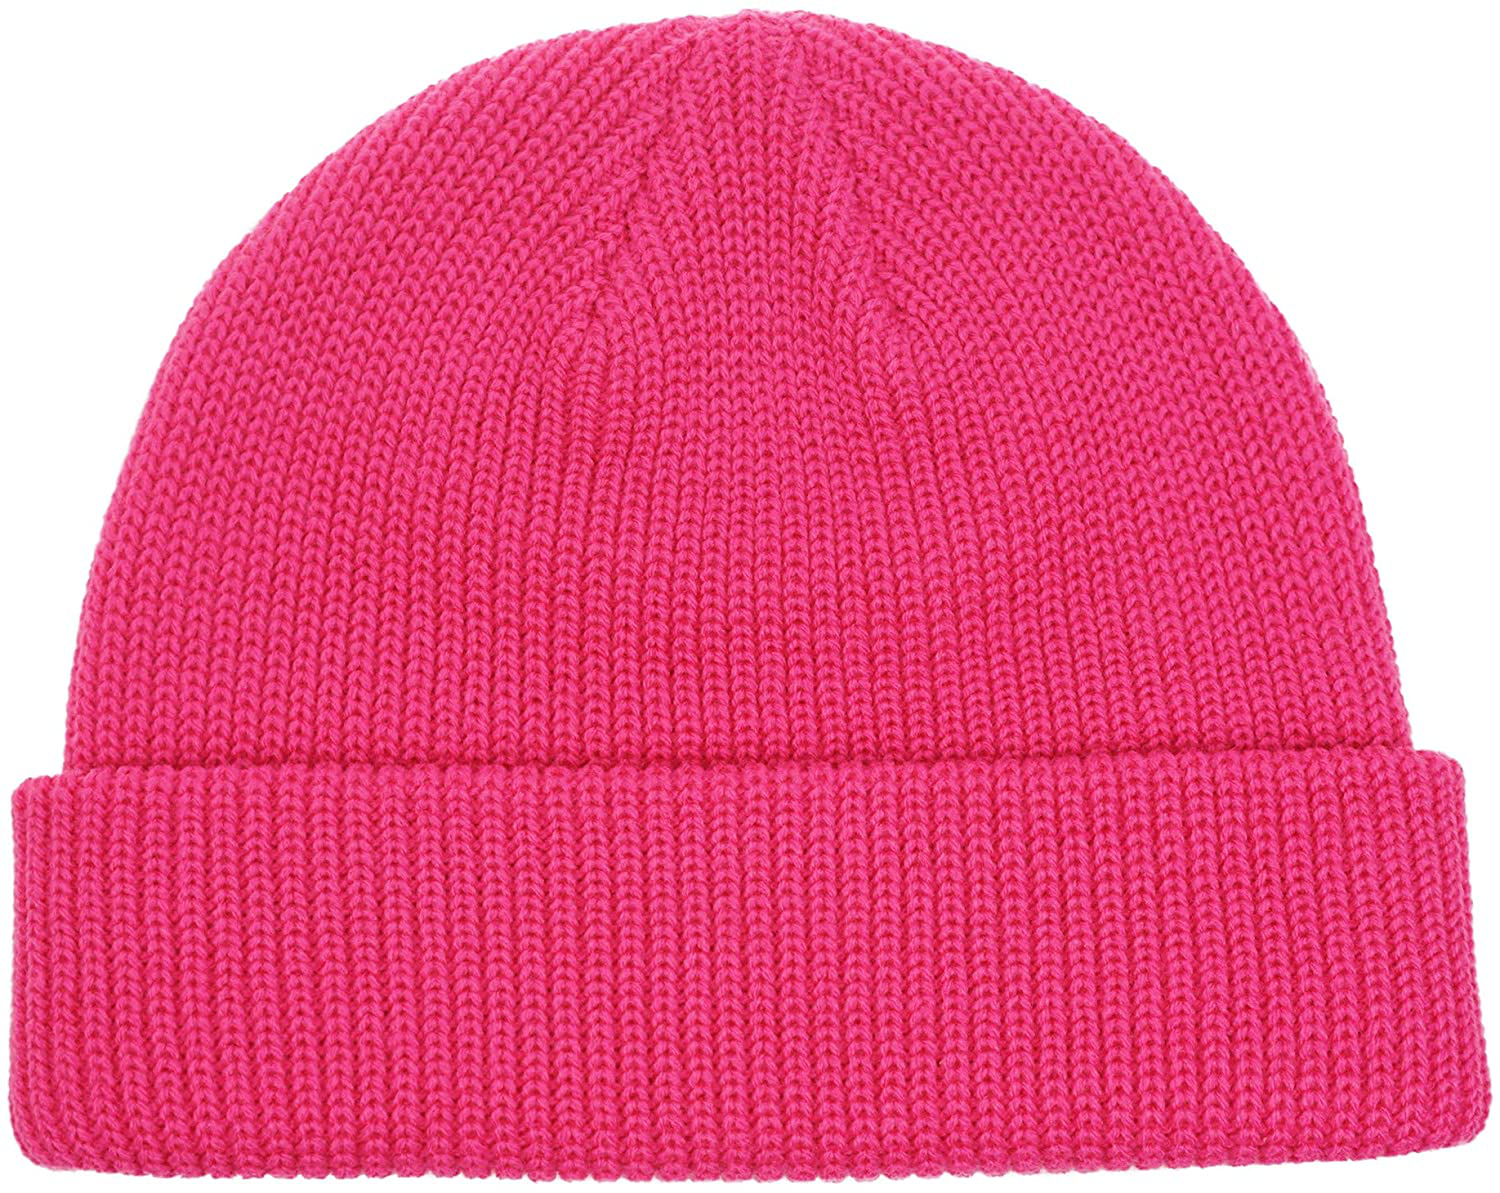 Connectyle Classic Men'S Warm Winter Hats Acrylic Knit Cuff Beanie Cap Daily Beanie Hat